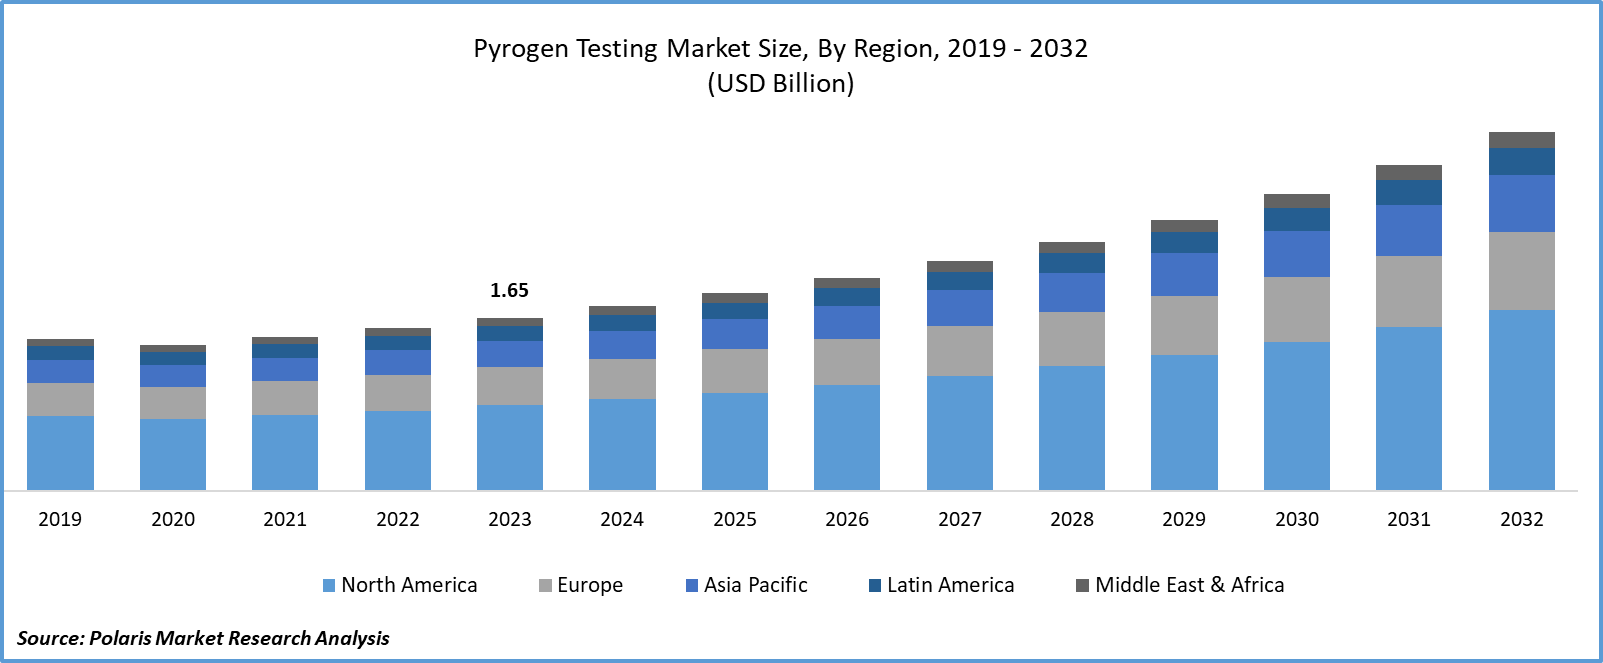 Pyrogen Testing Market Size